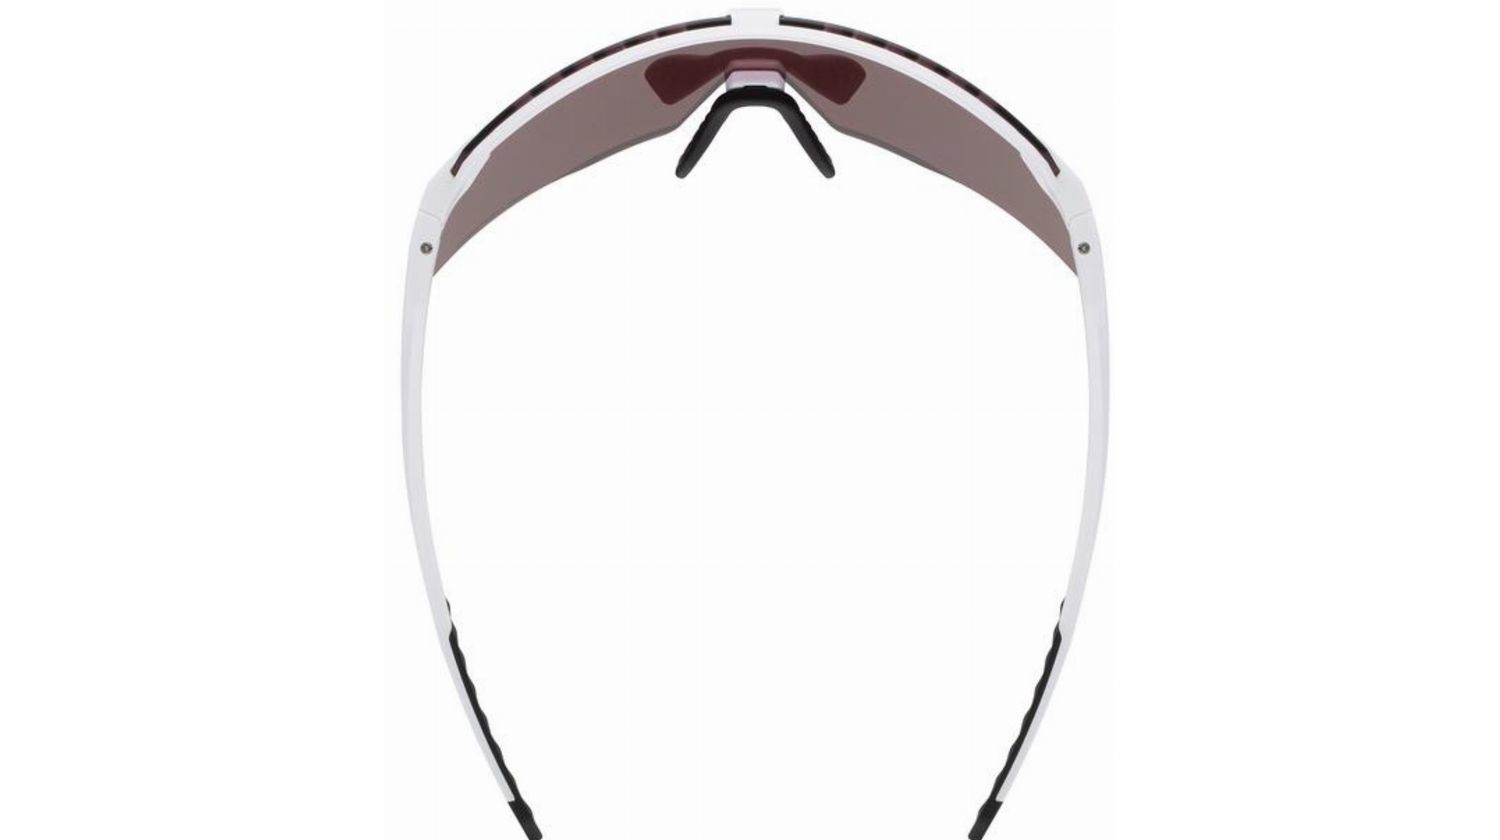 Uvex Pace Stage CV Sportbrille white matt/glossy green